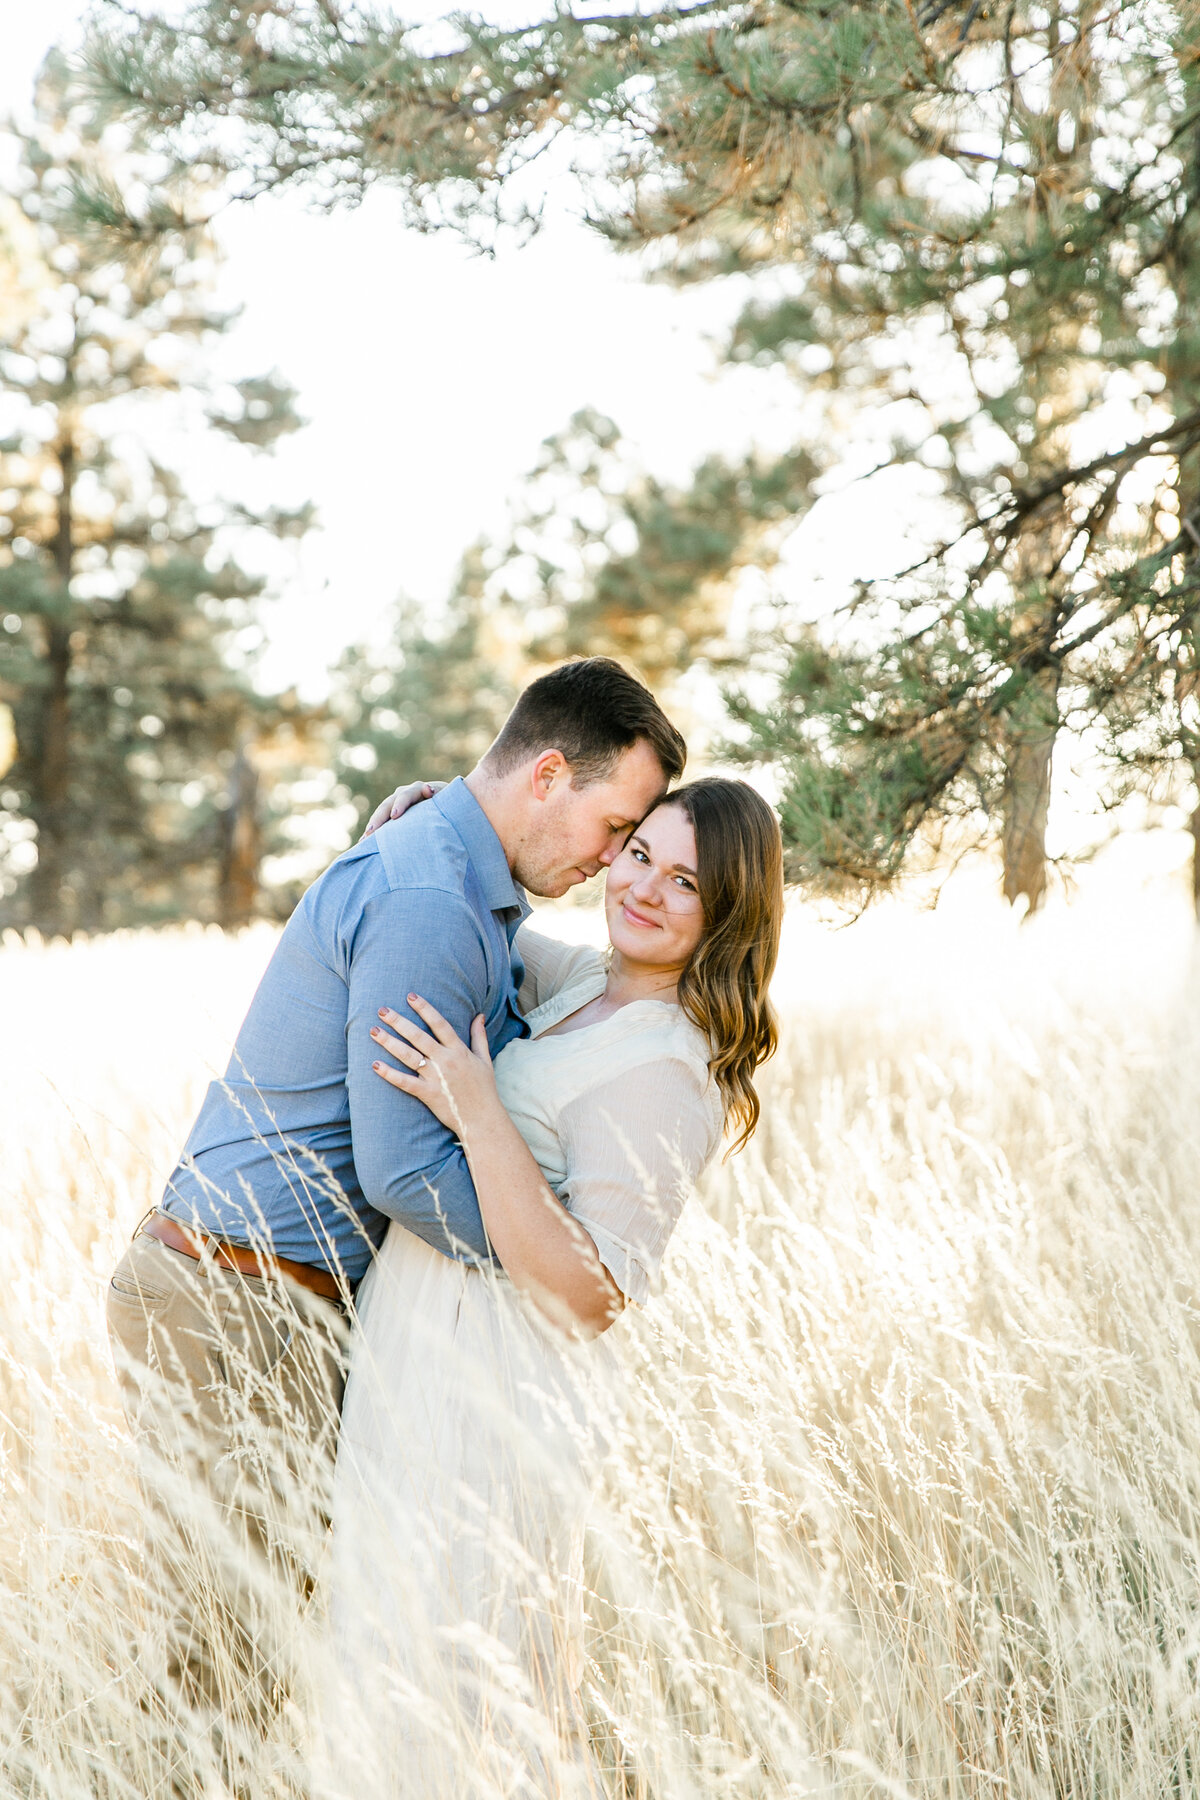 Karlie Colleen Photography - Flagstaff Arizona Engagement Photographer - Britt & Josh -149